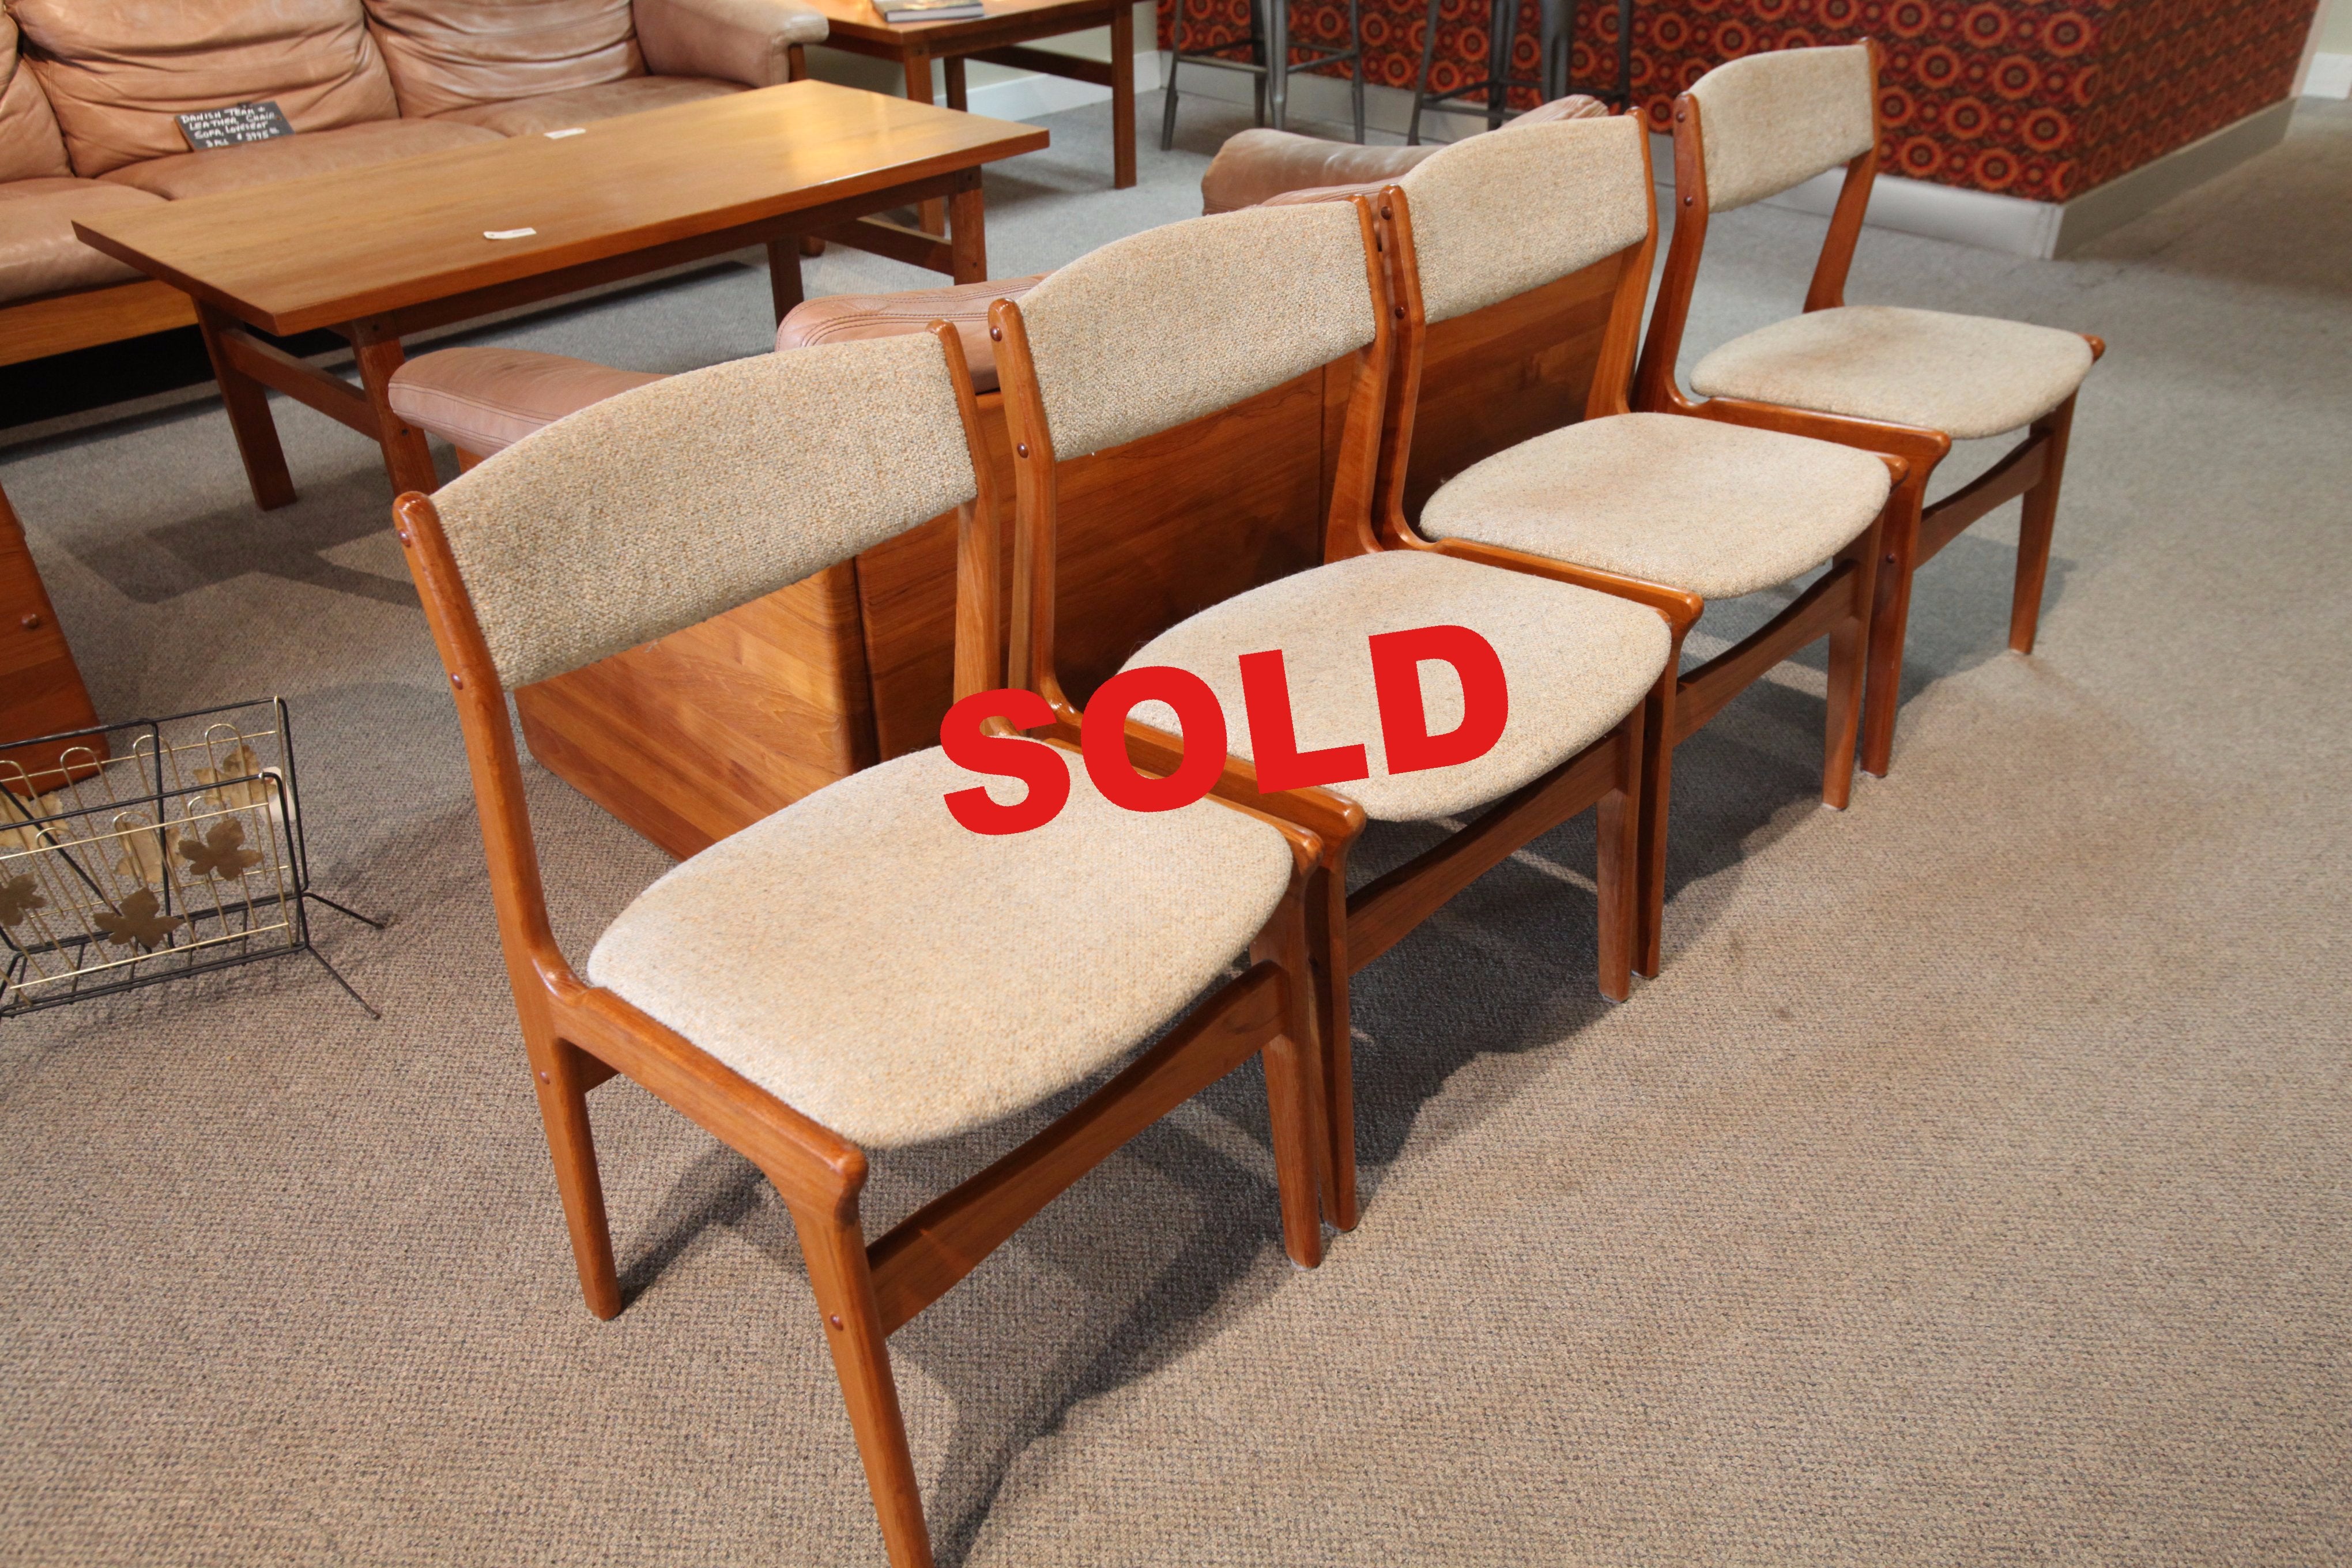 Set of 4 Vintage Teak Chairs